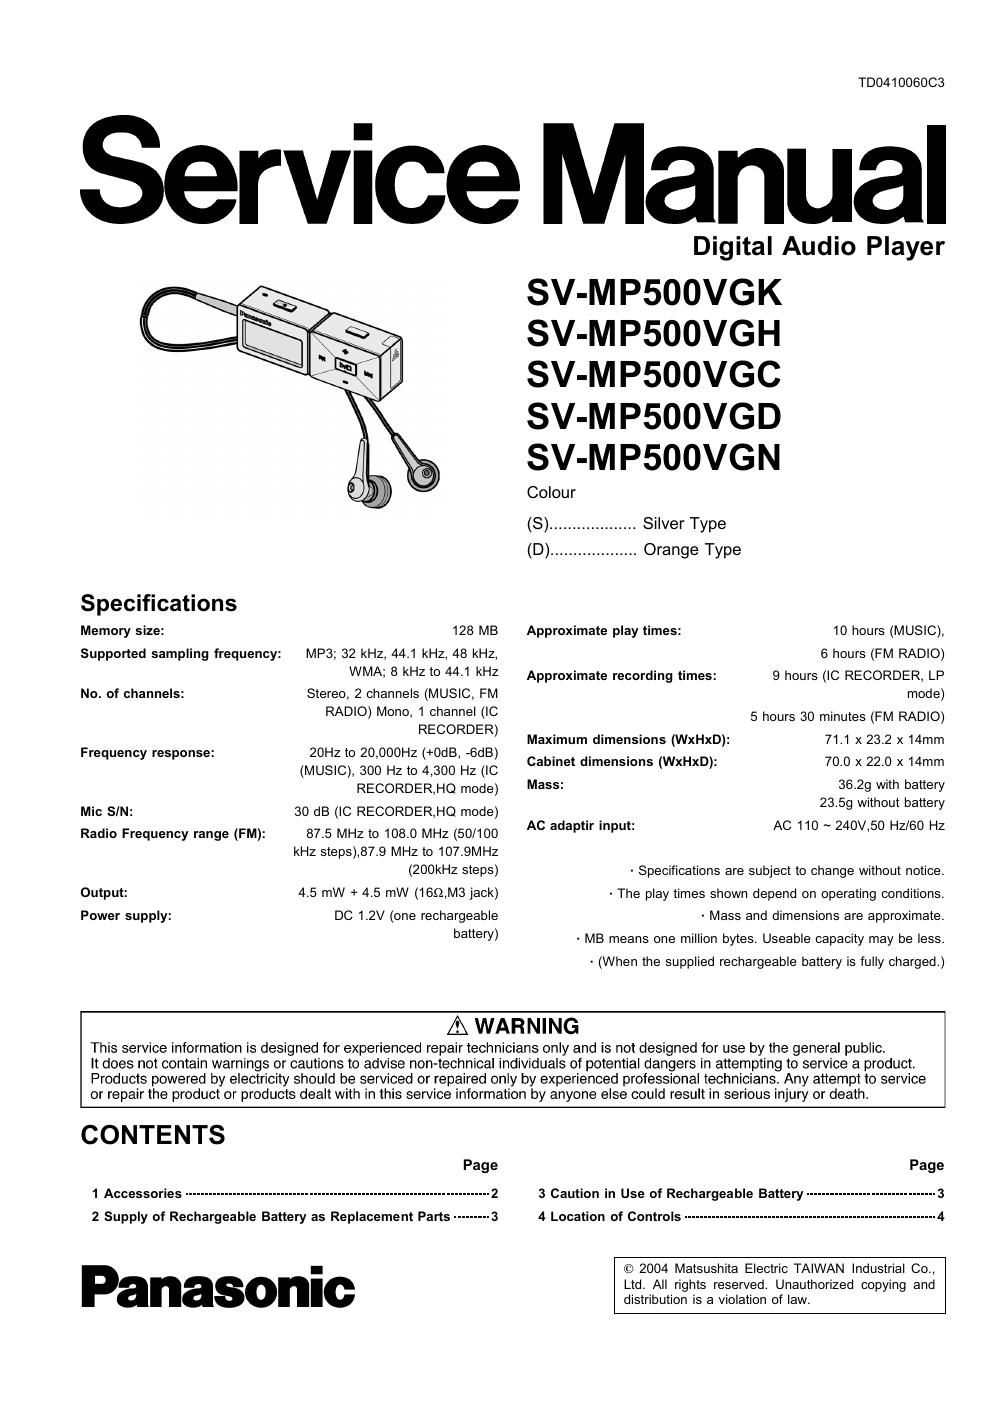 panasonic sv mp 500 vgc service manual